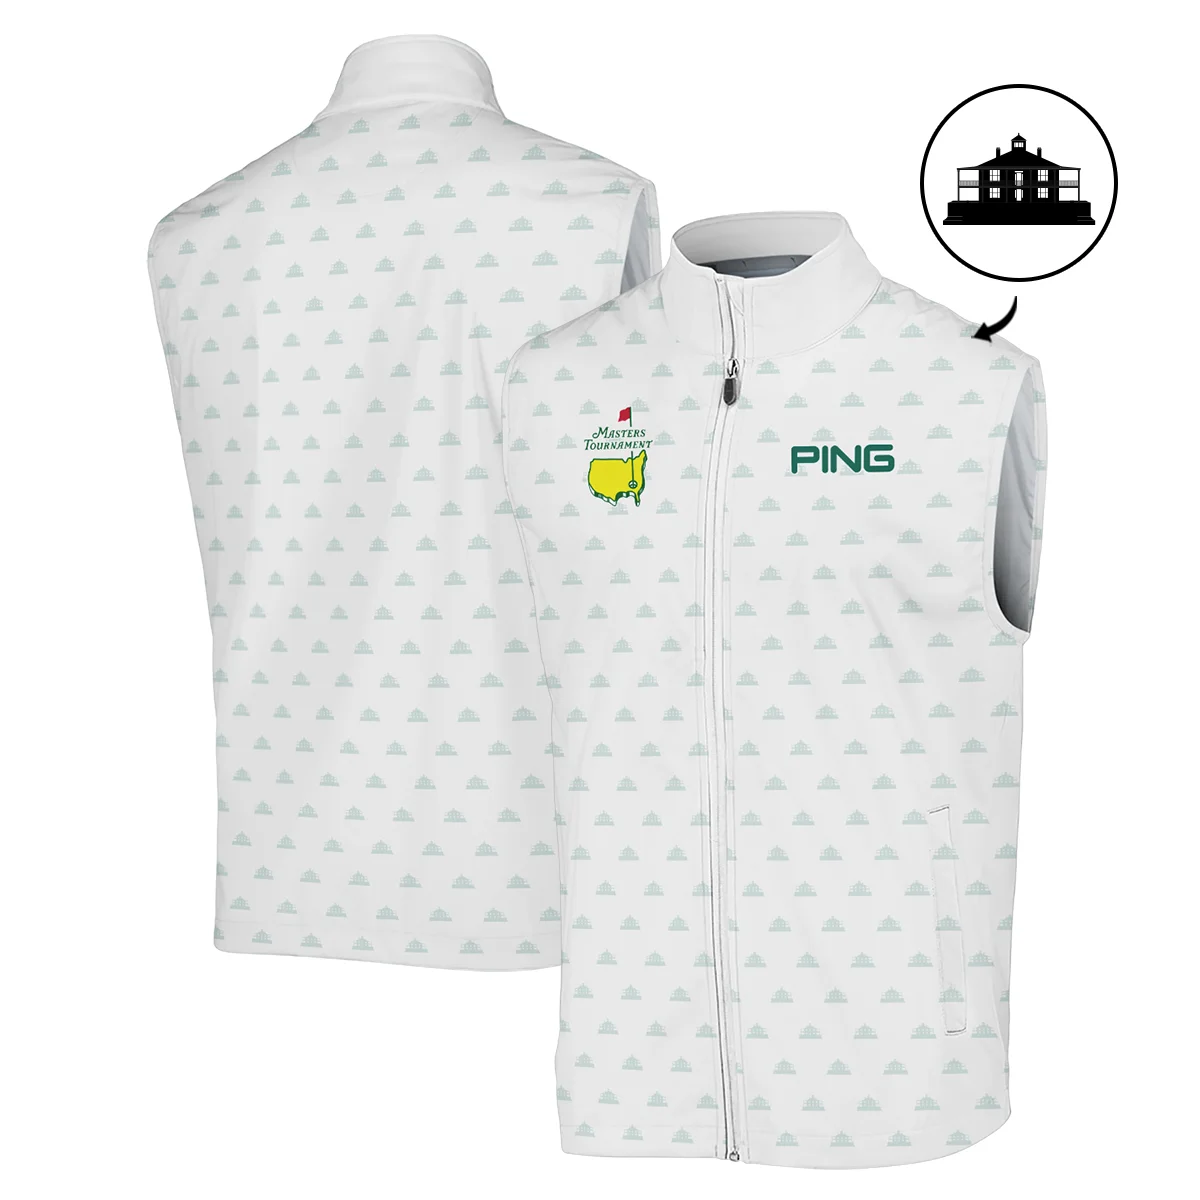 Masters Tournament Golf Sport Ping Sleeveless Jacket Sports Cup Pattern White Green Sleeveless Jacket